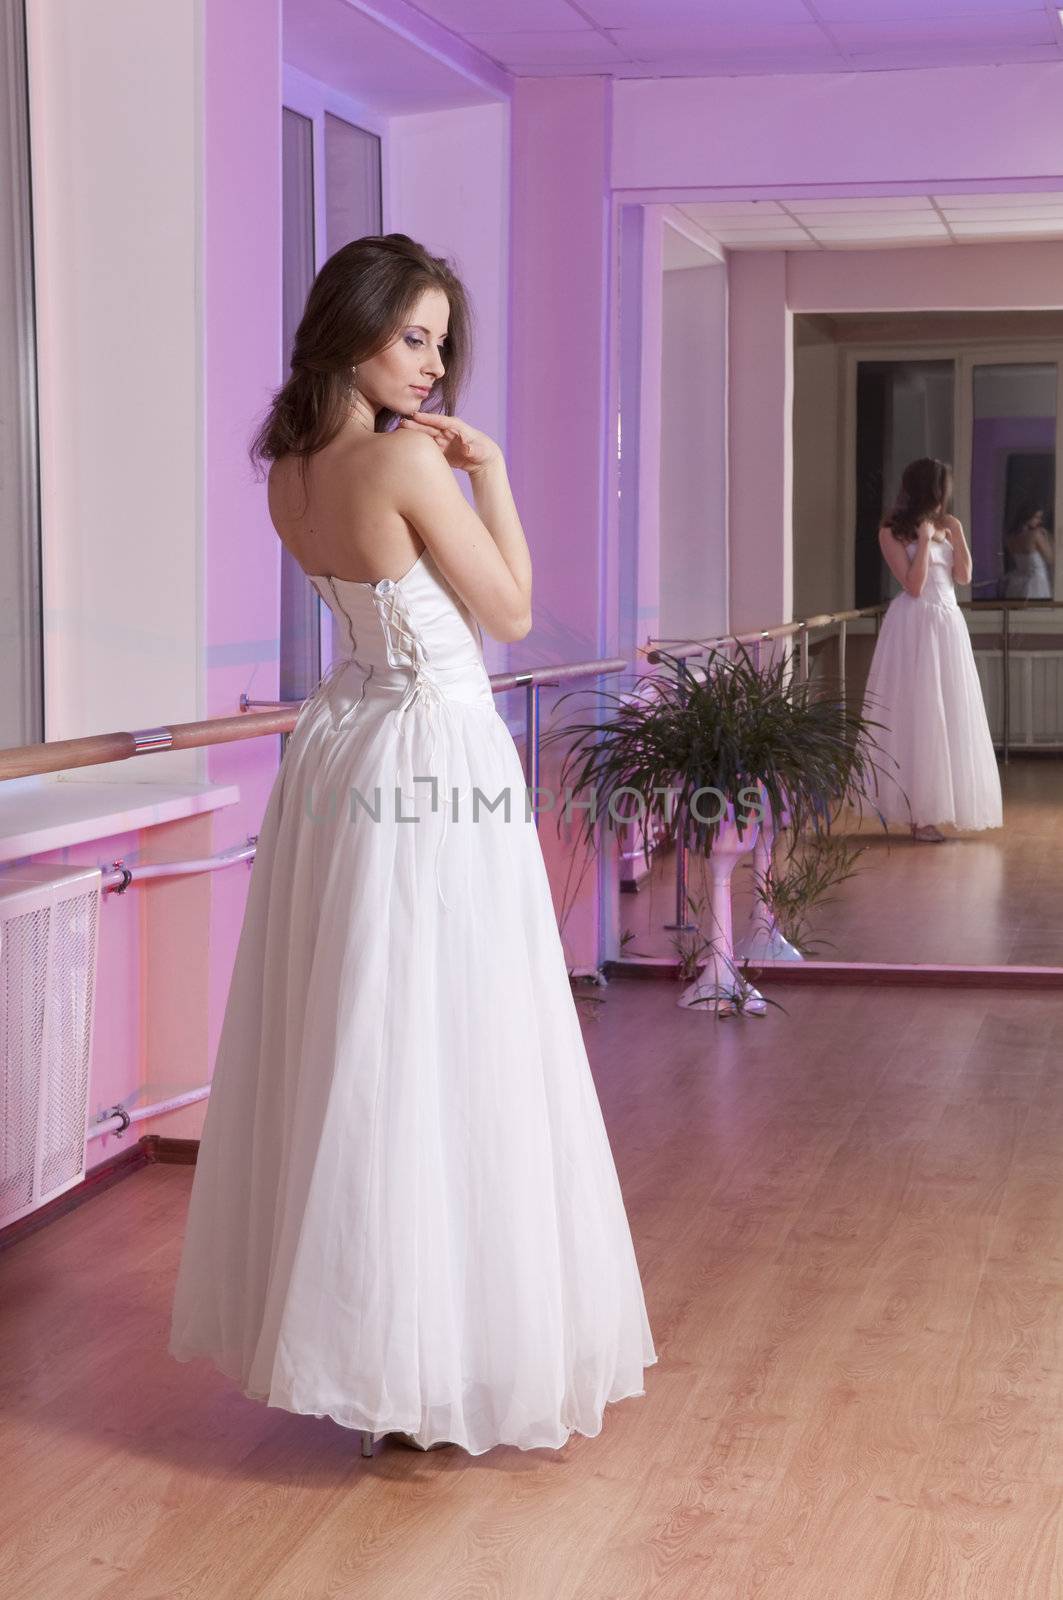 Girl in wedding dress by alexei171